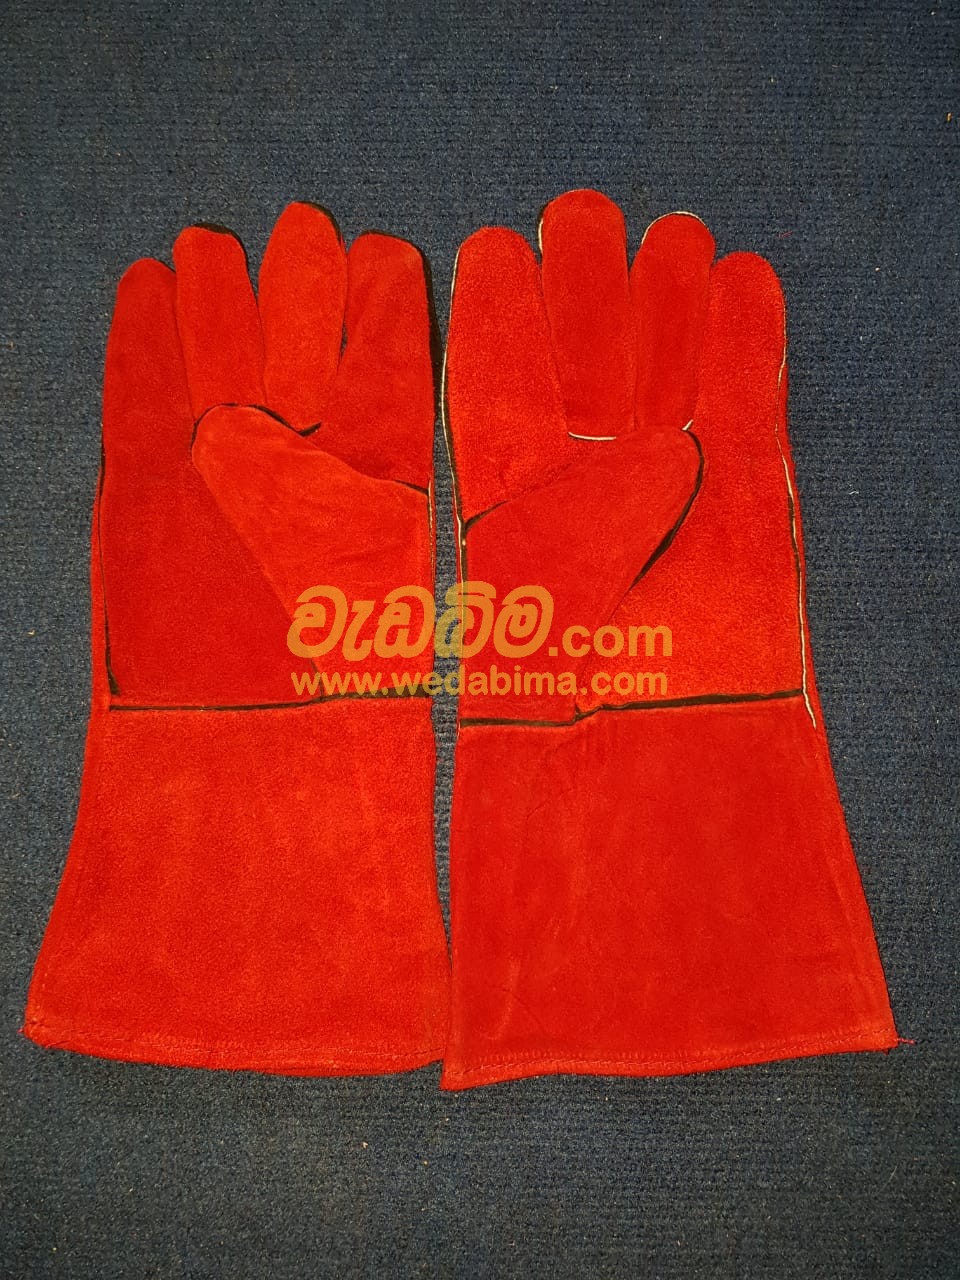 Gloves Sri Lanka